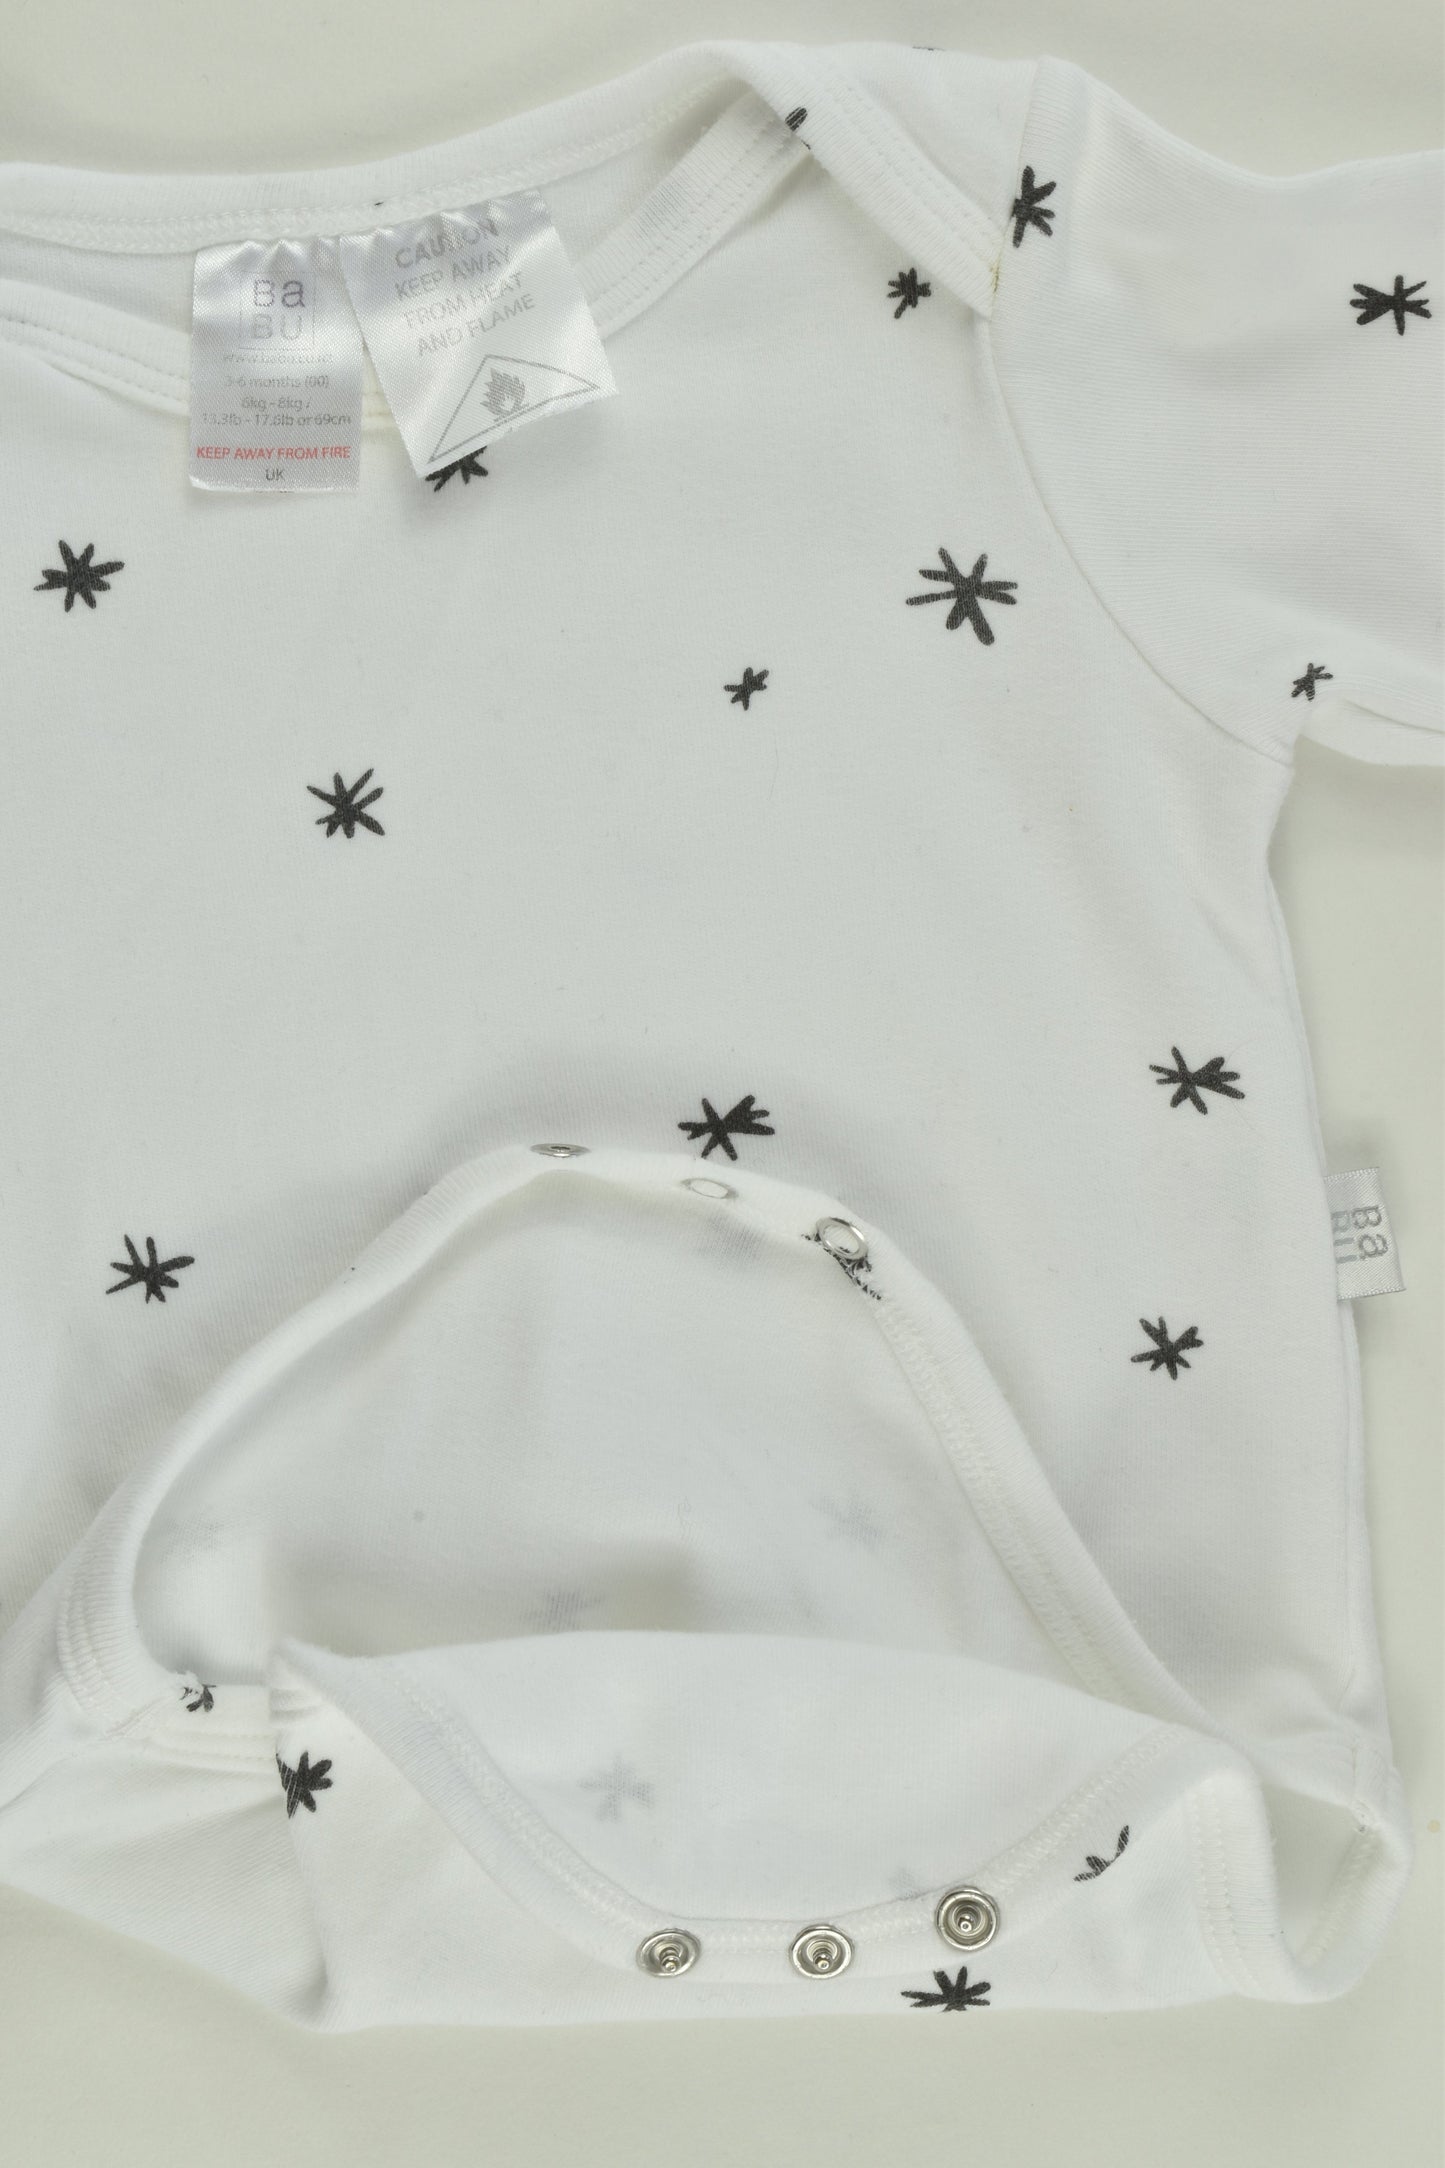 Babu Size 00 (3-6 months) Stars Bodysuit